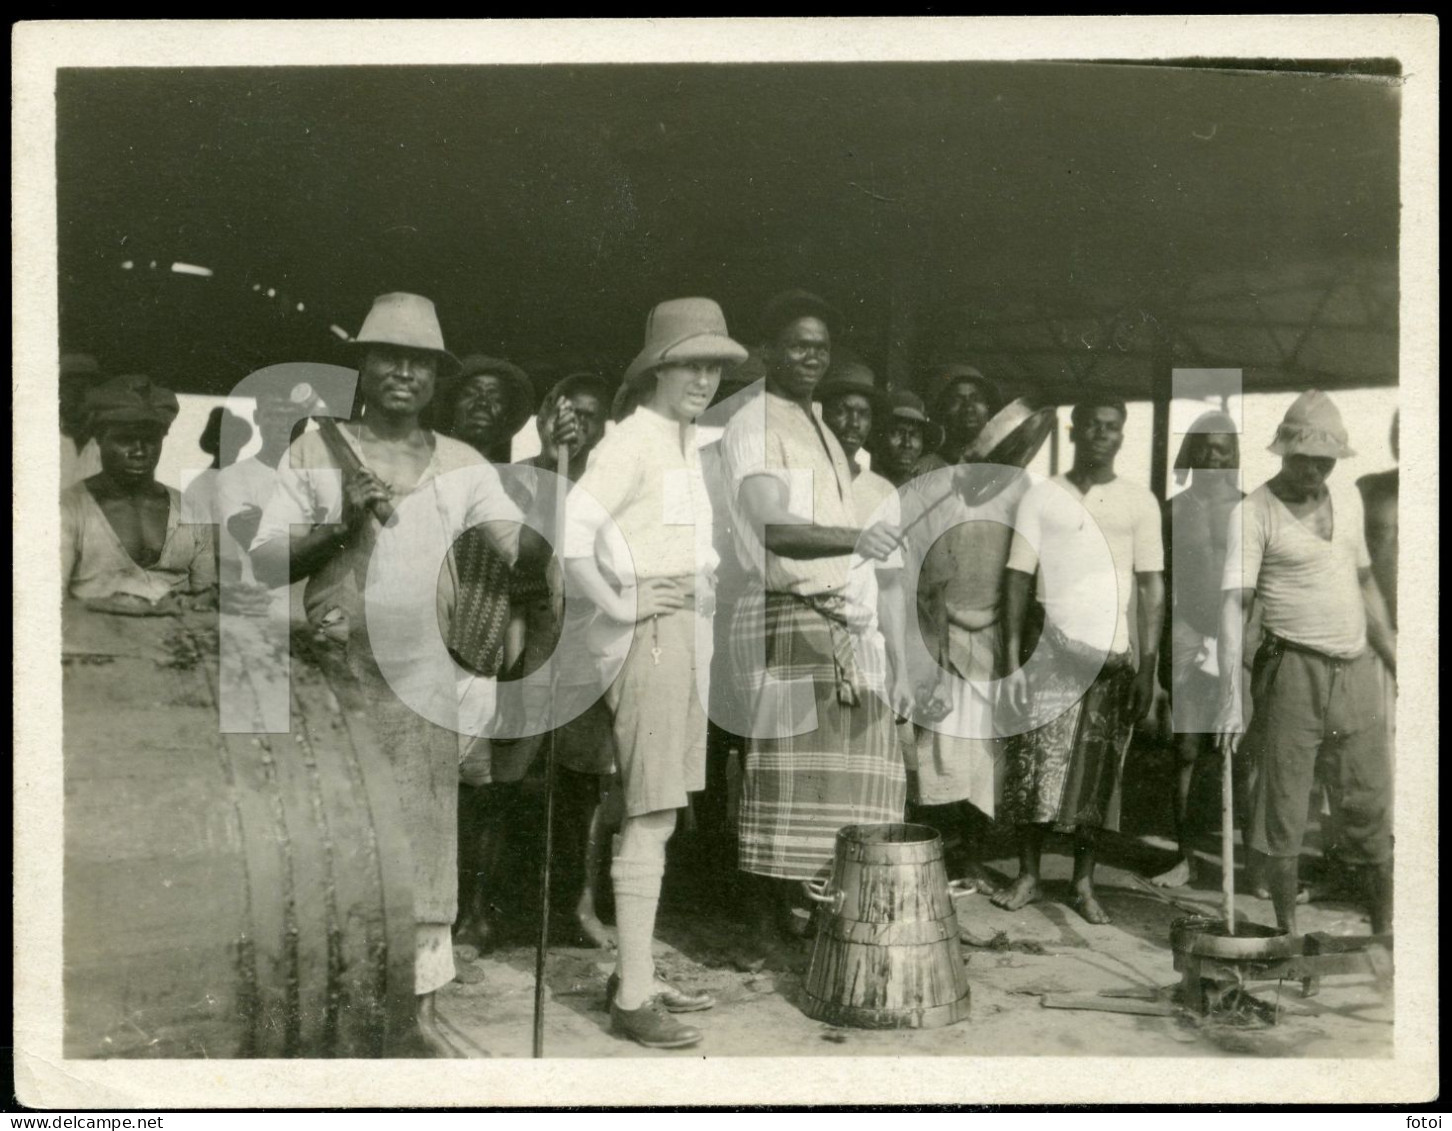 30s ORIGINAL FOTO PHOTO PALM OIL OLEO DE PALMA ANGOLA AFRICA AFRIQUE AT179 - Africa